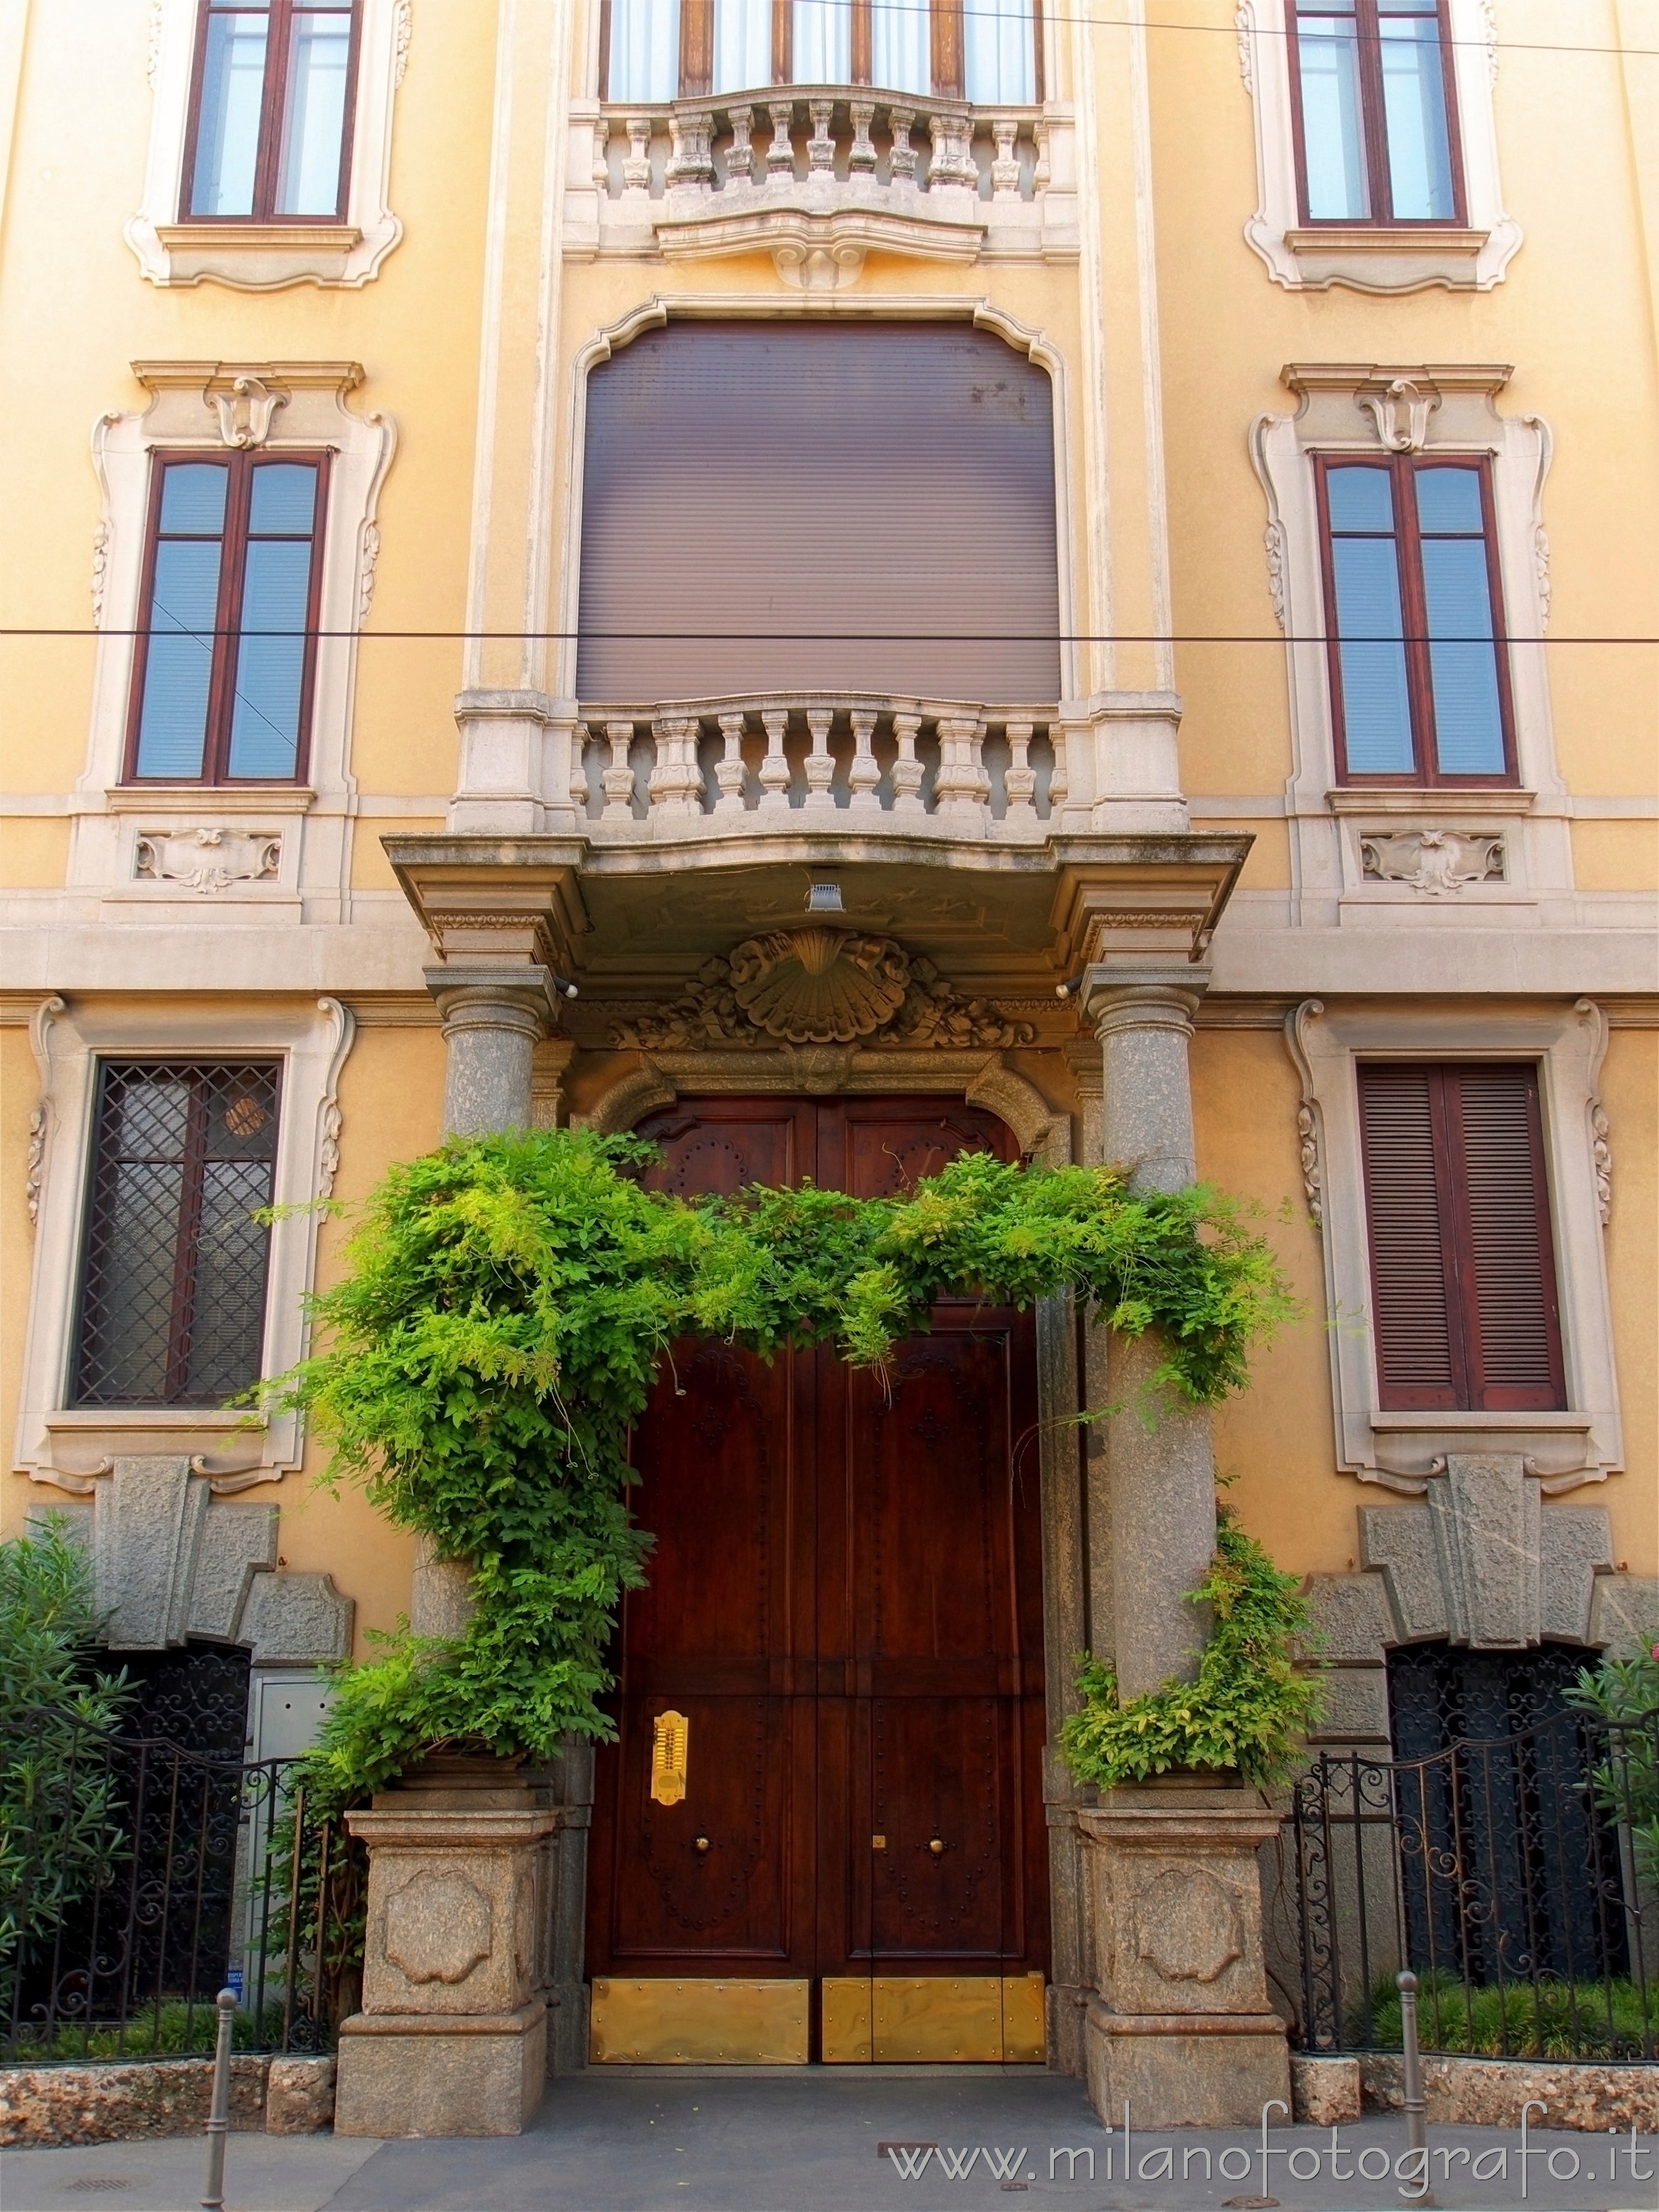 Milan (Italy): Entrance of an elegant palace in corso Italia - Milan (Italy)